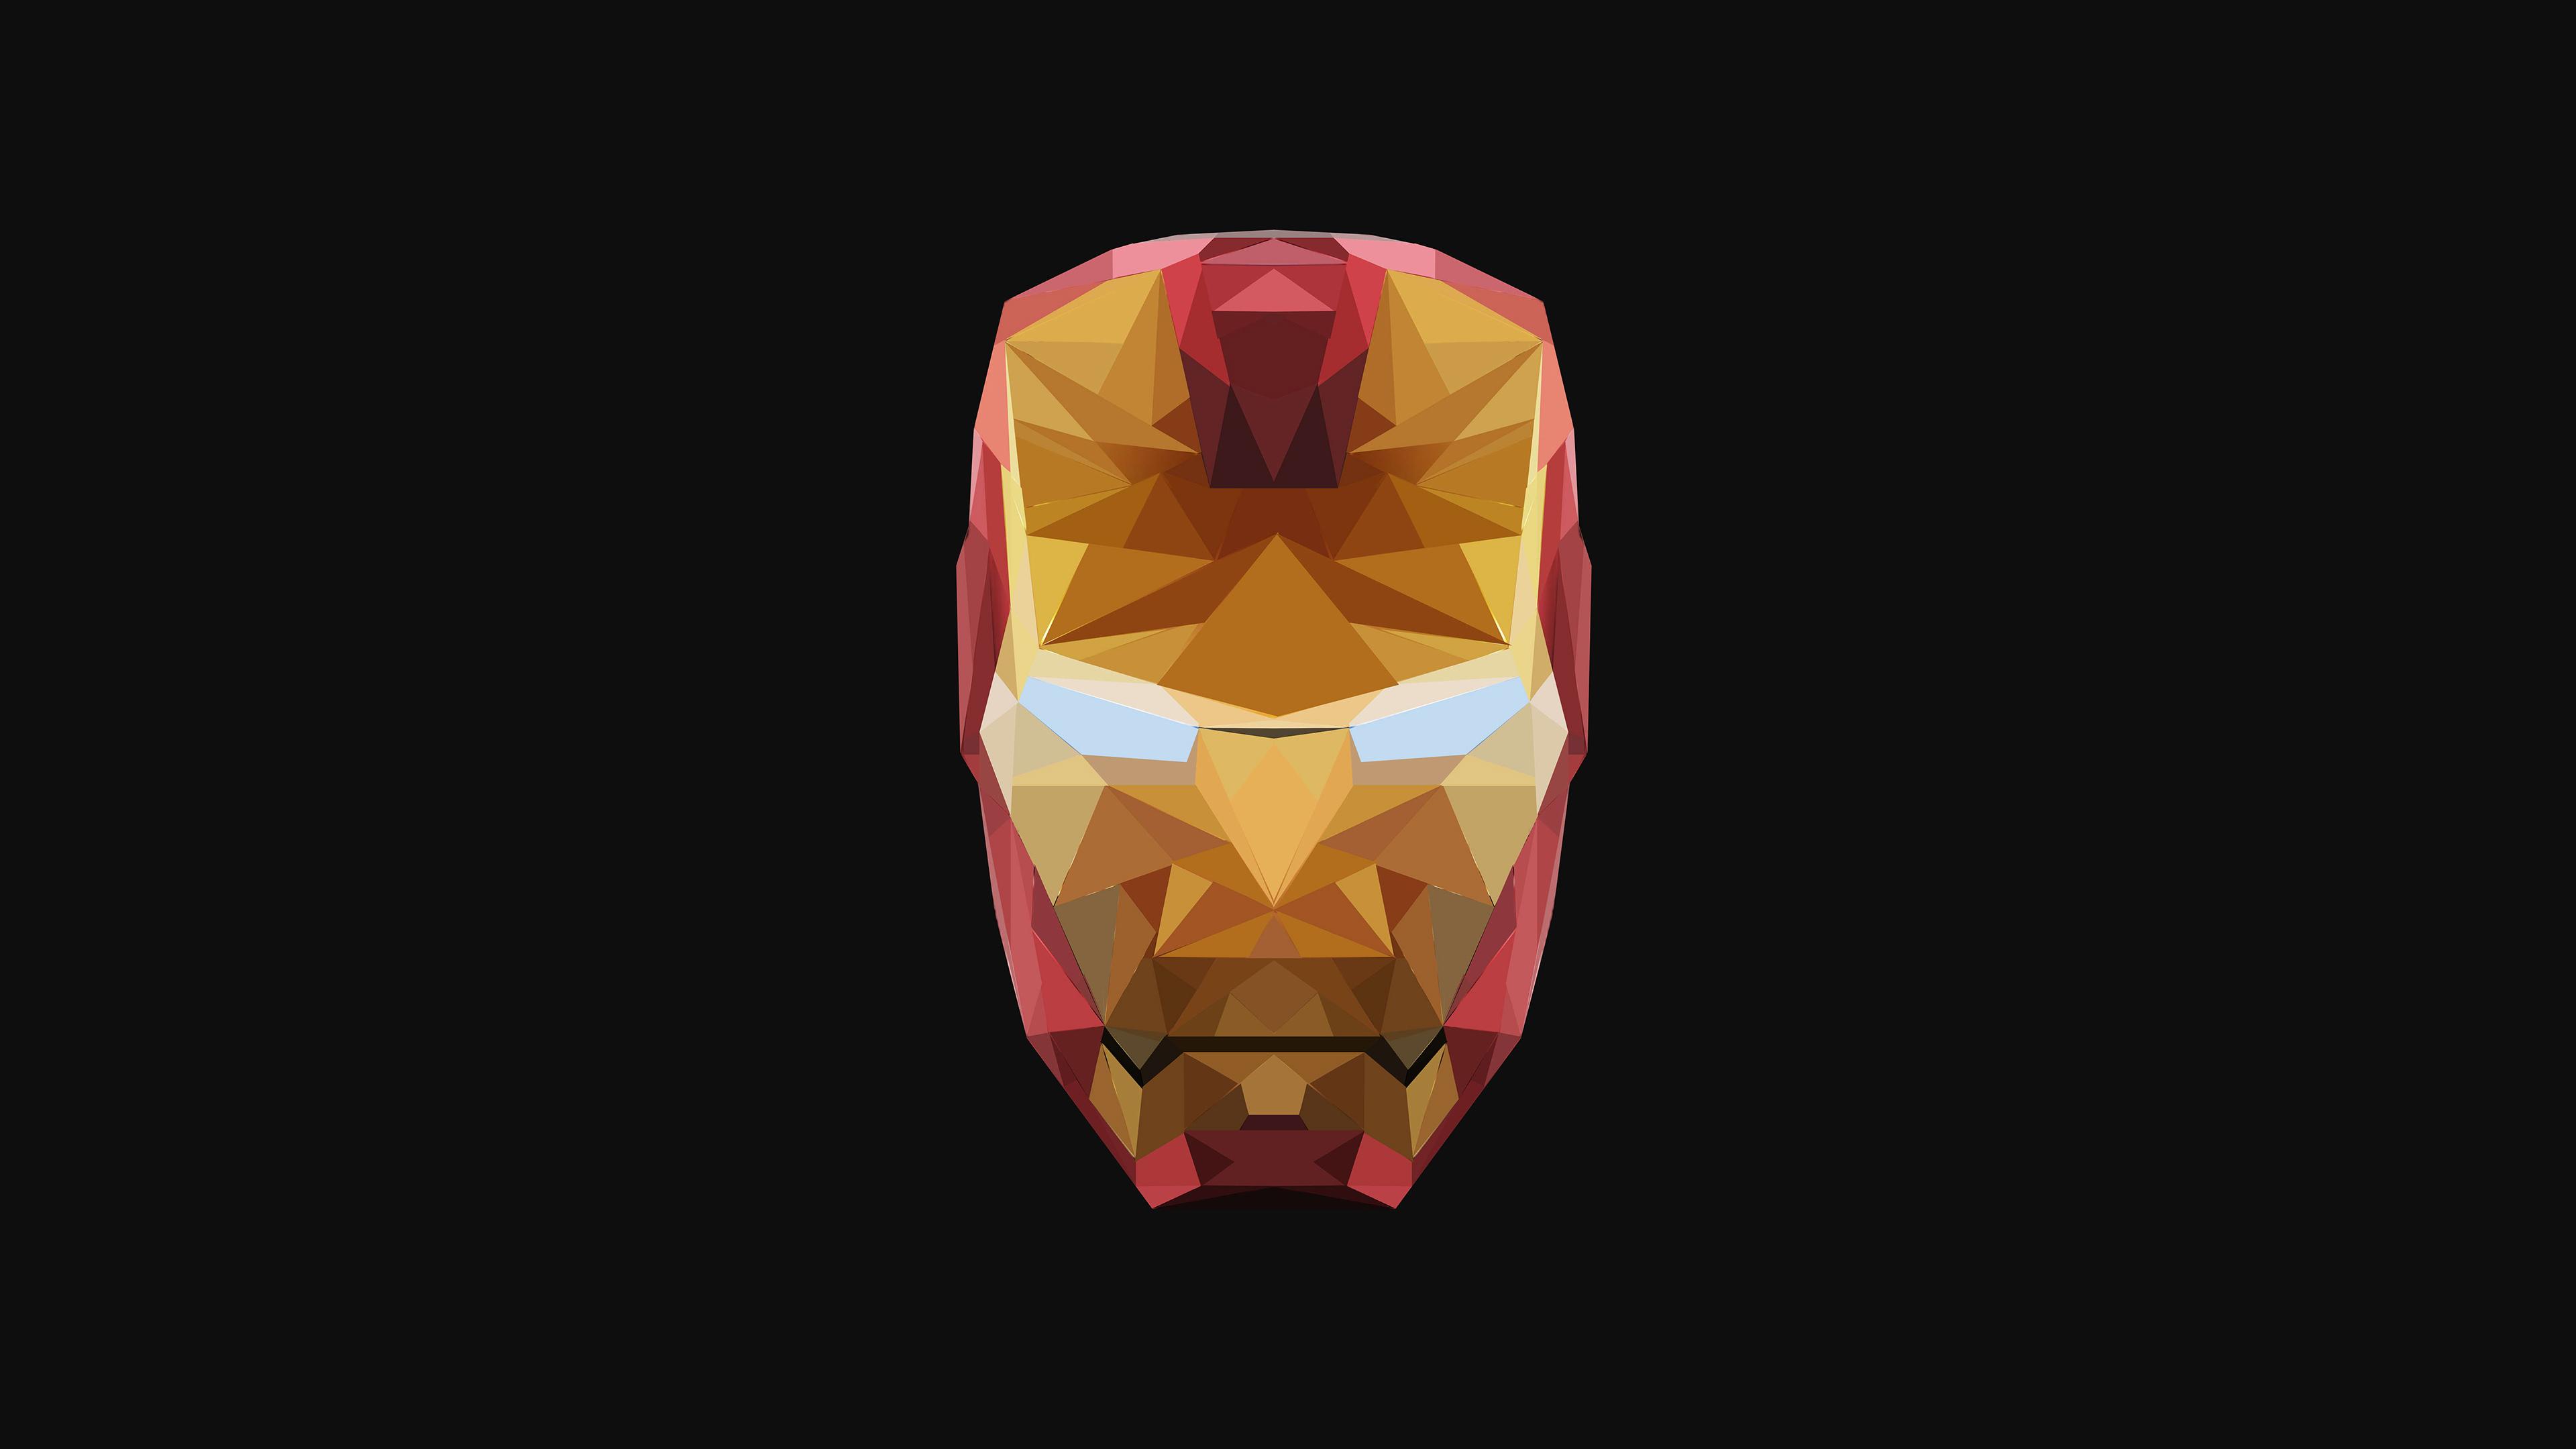 4k Iron Man Low Poly, HD Superheroes, 4k Wallpaper, Image